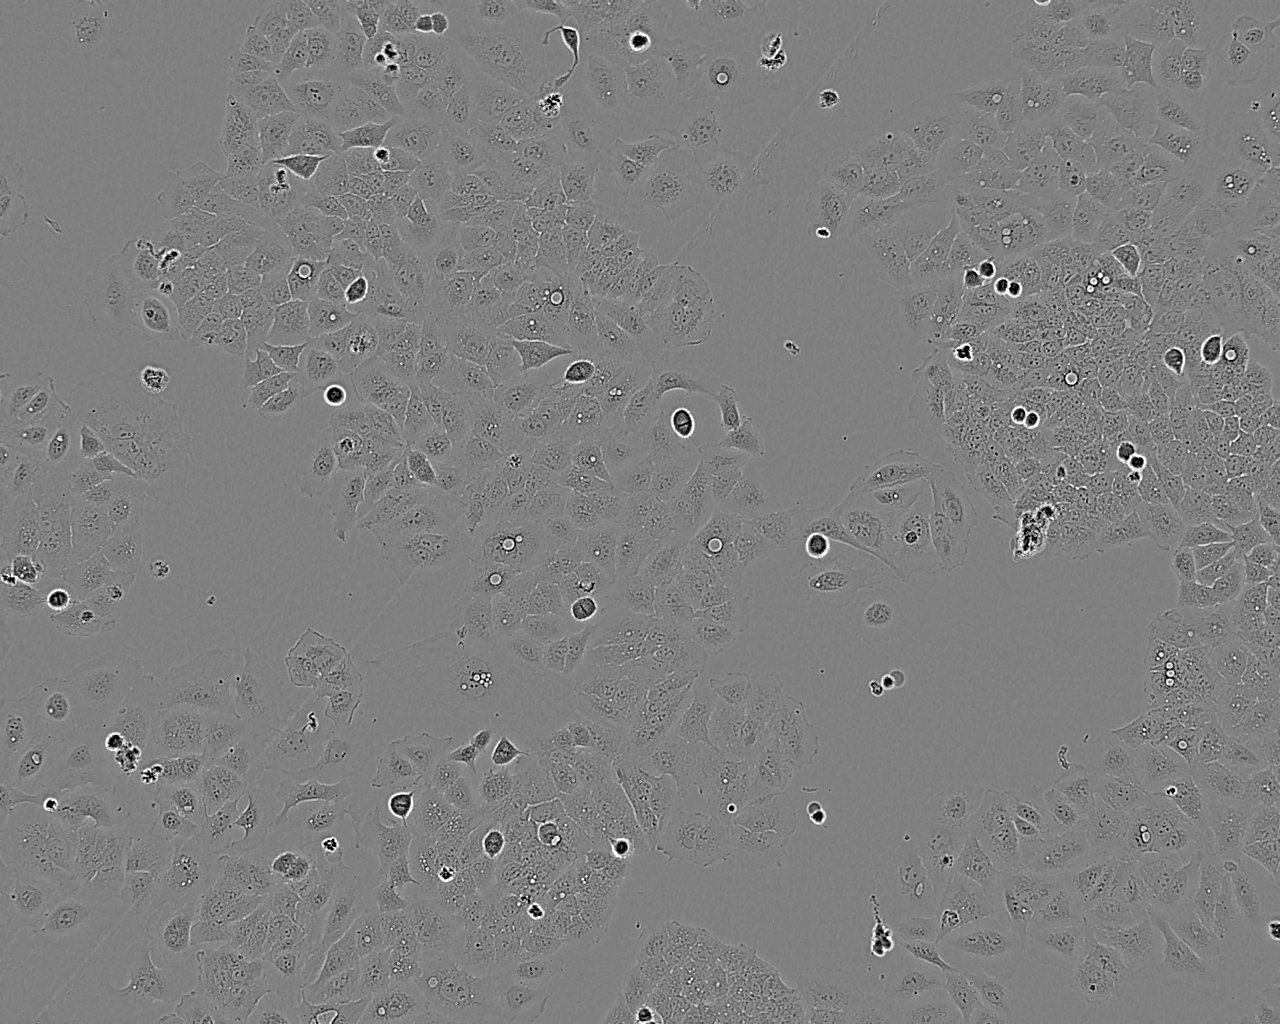 SV40 MES 13 Cell:小鼠肾小球系膜细胞系